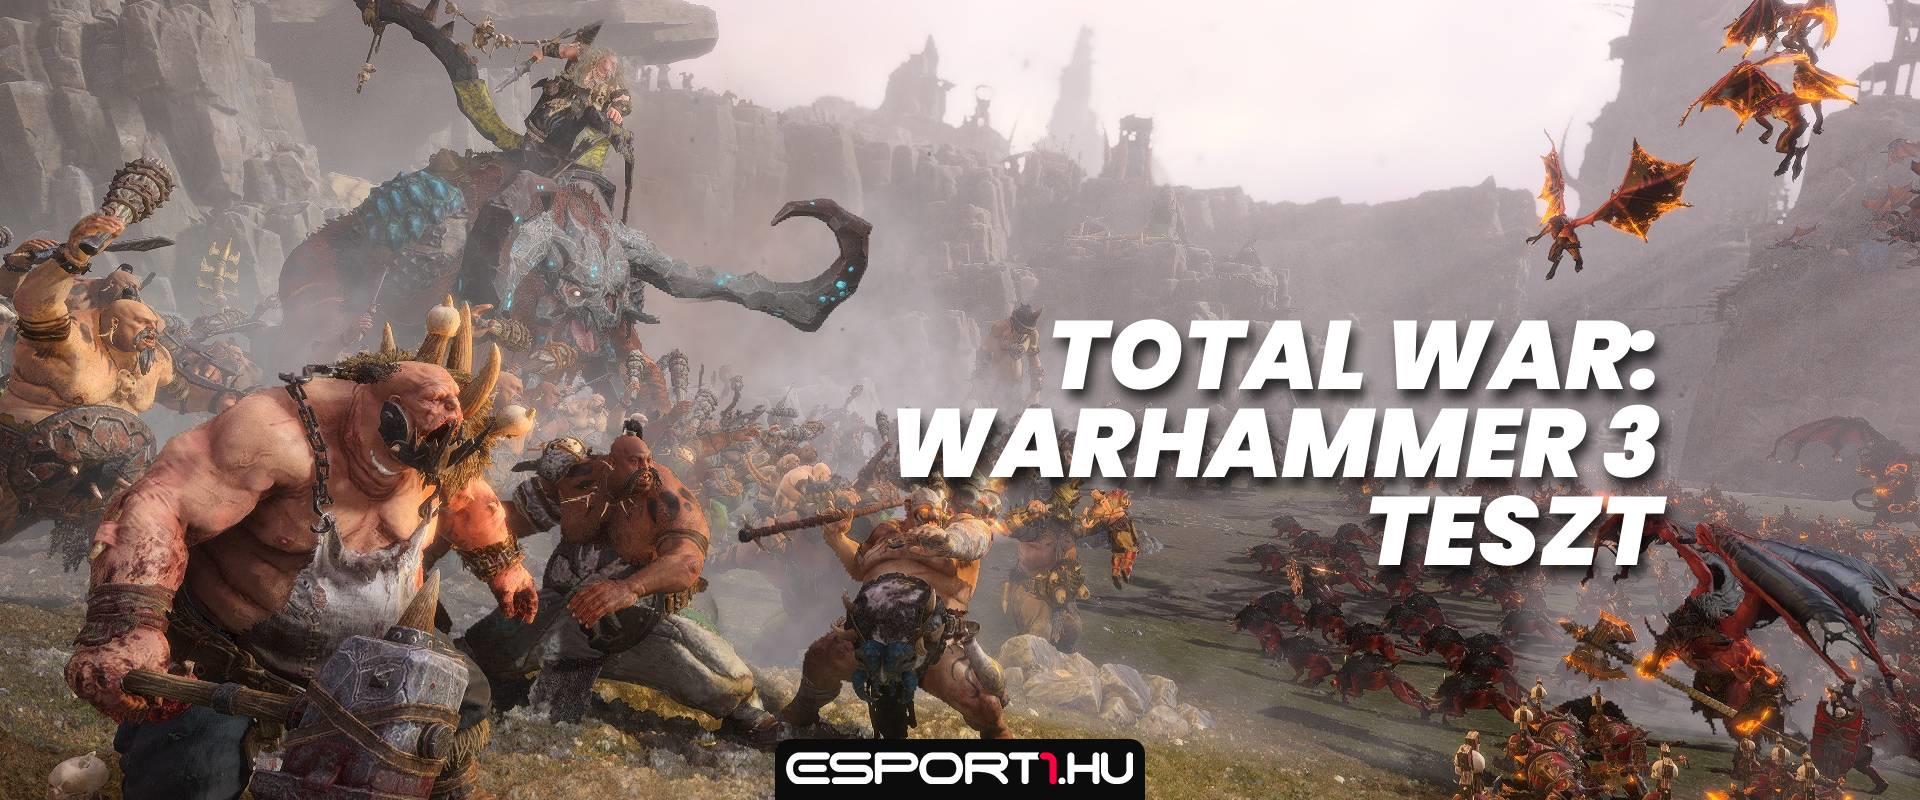 Total War: Warhammer 3 – Totális háború a köbön